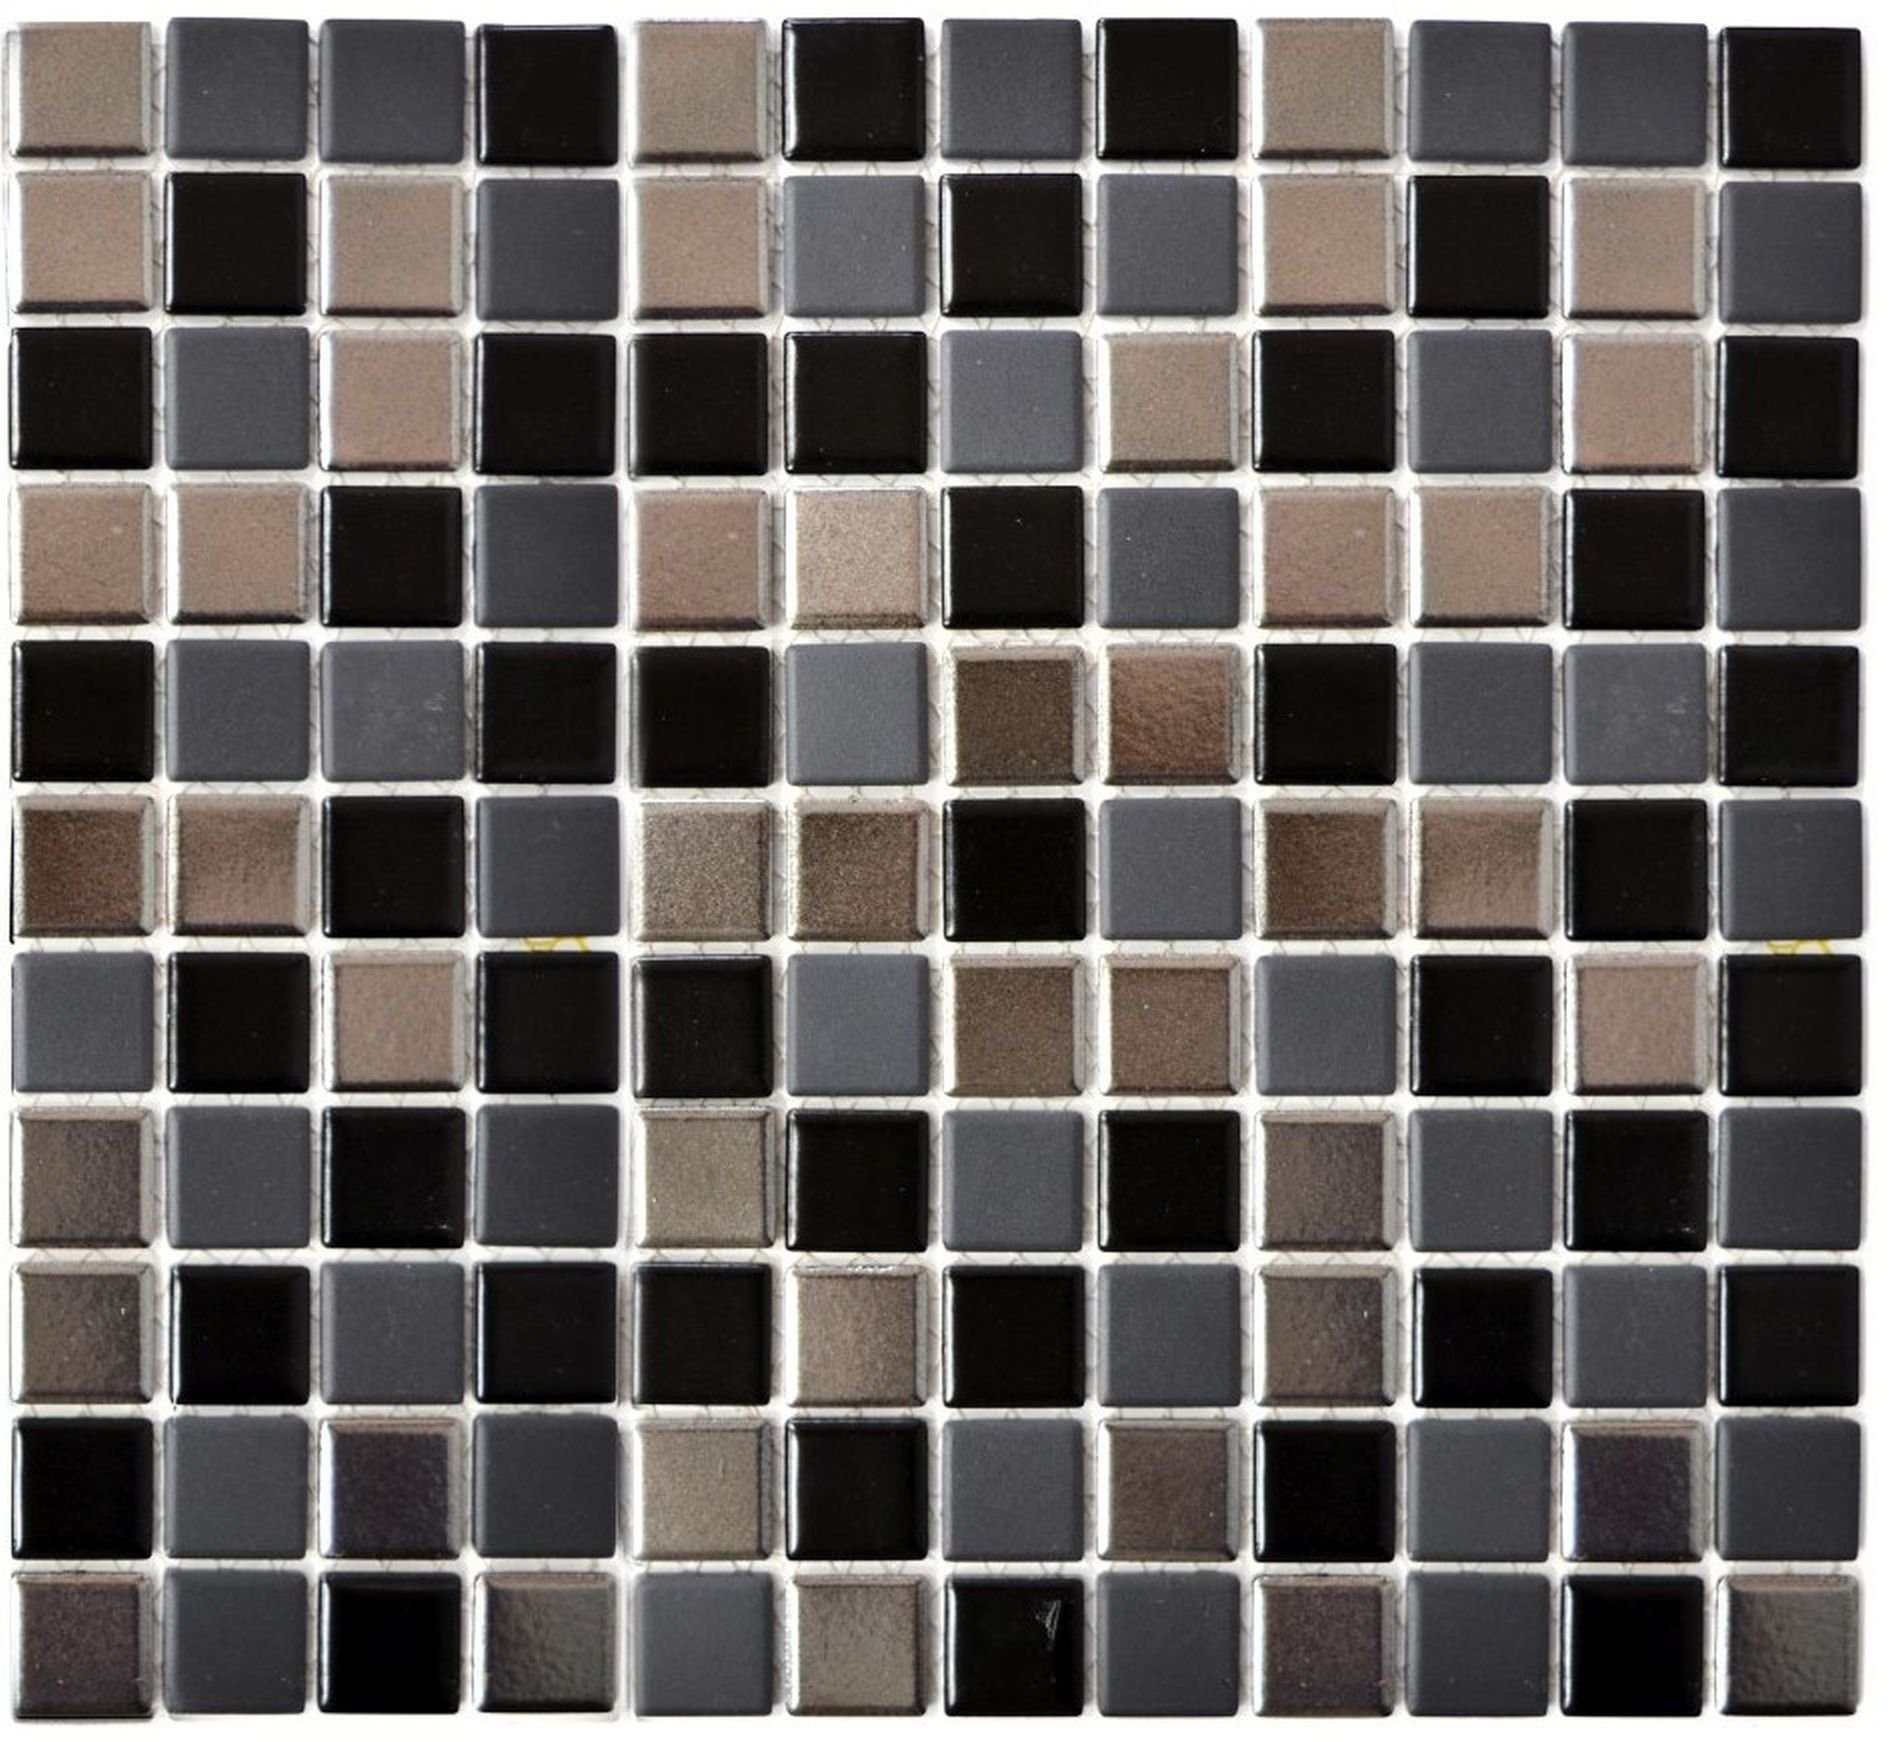 Mosani Mosaikfliesen Keramik Mosaik schwarz silber anthrazit chrome Küche